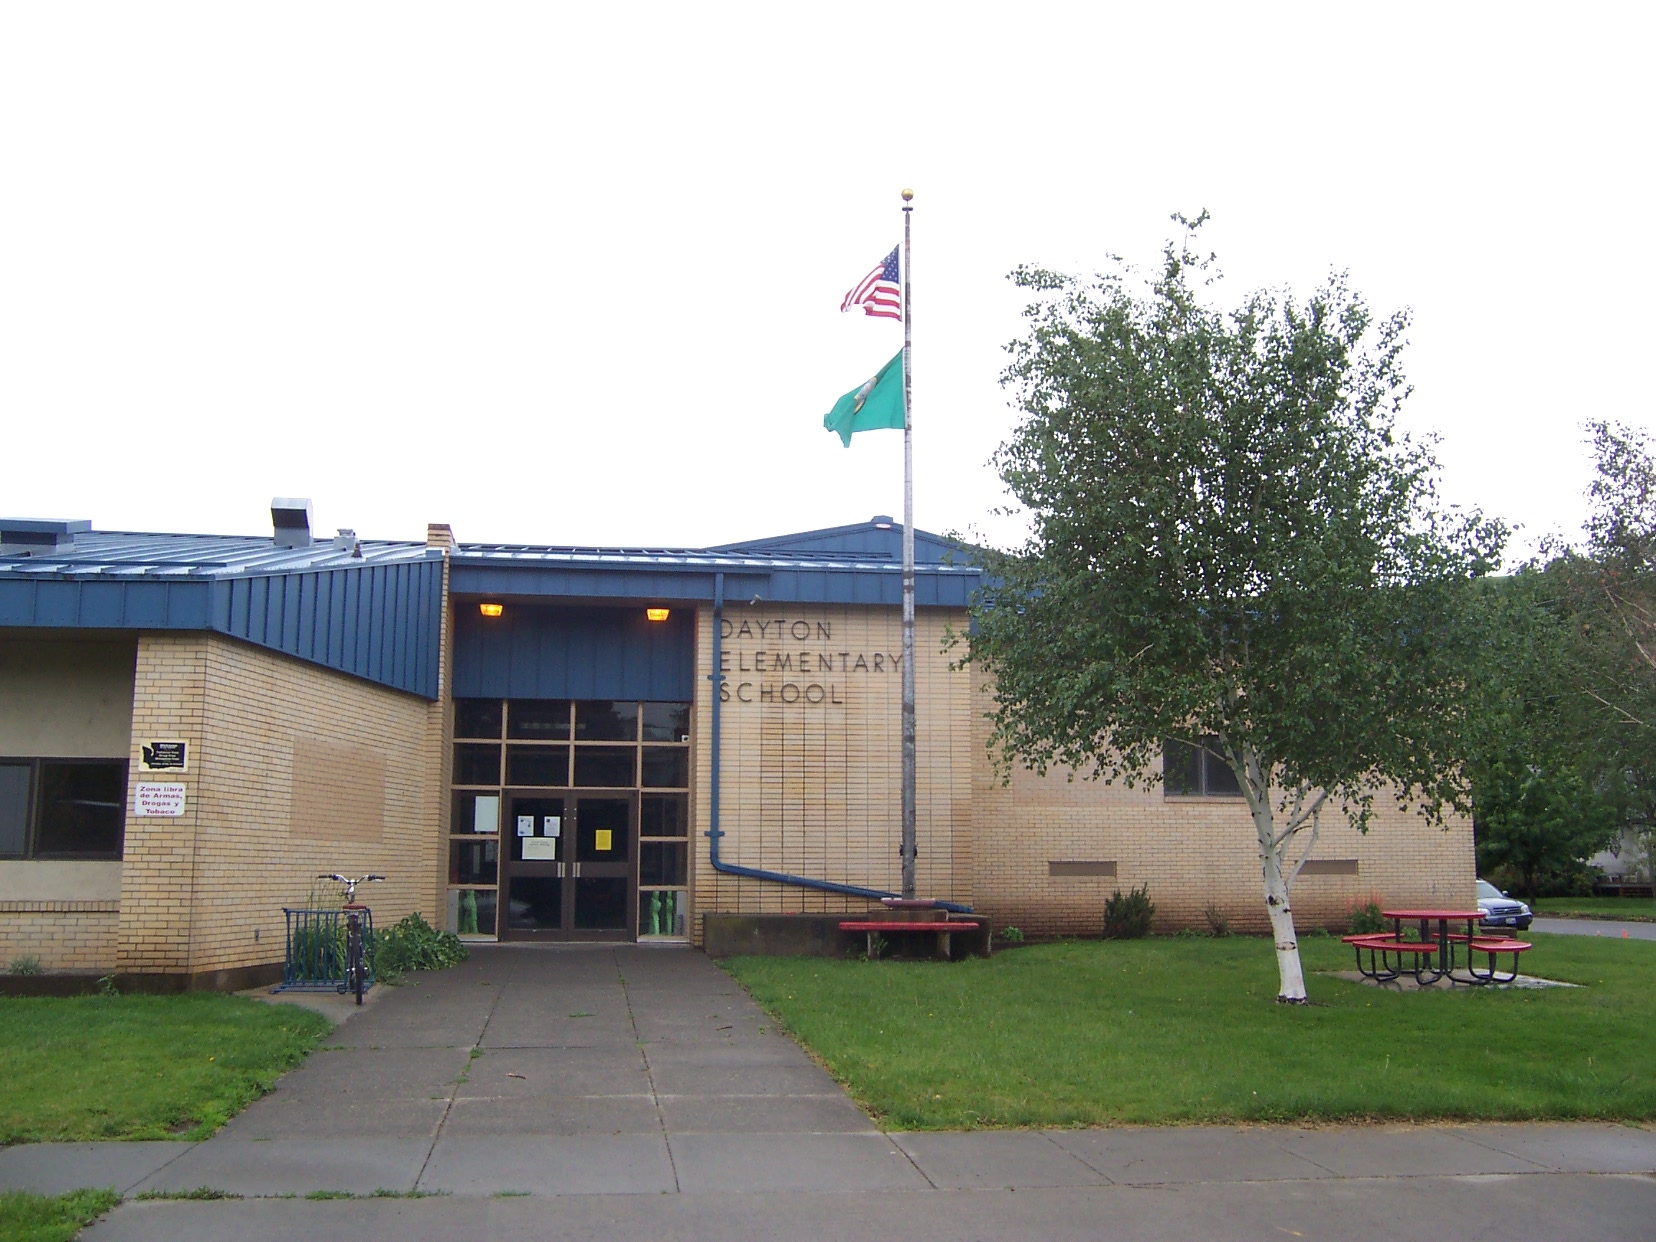 Dayton elementary school building